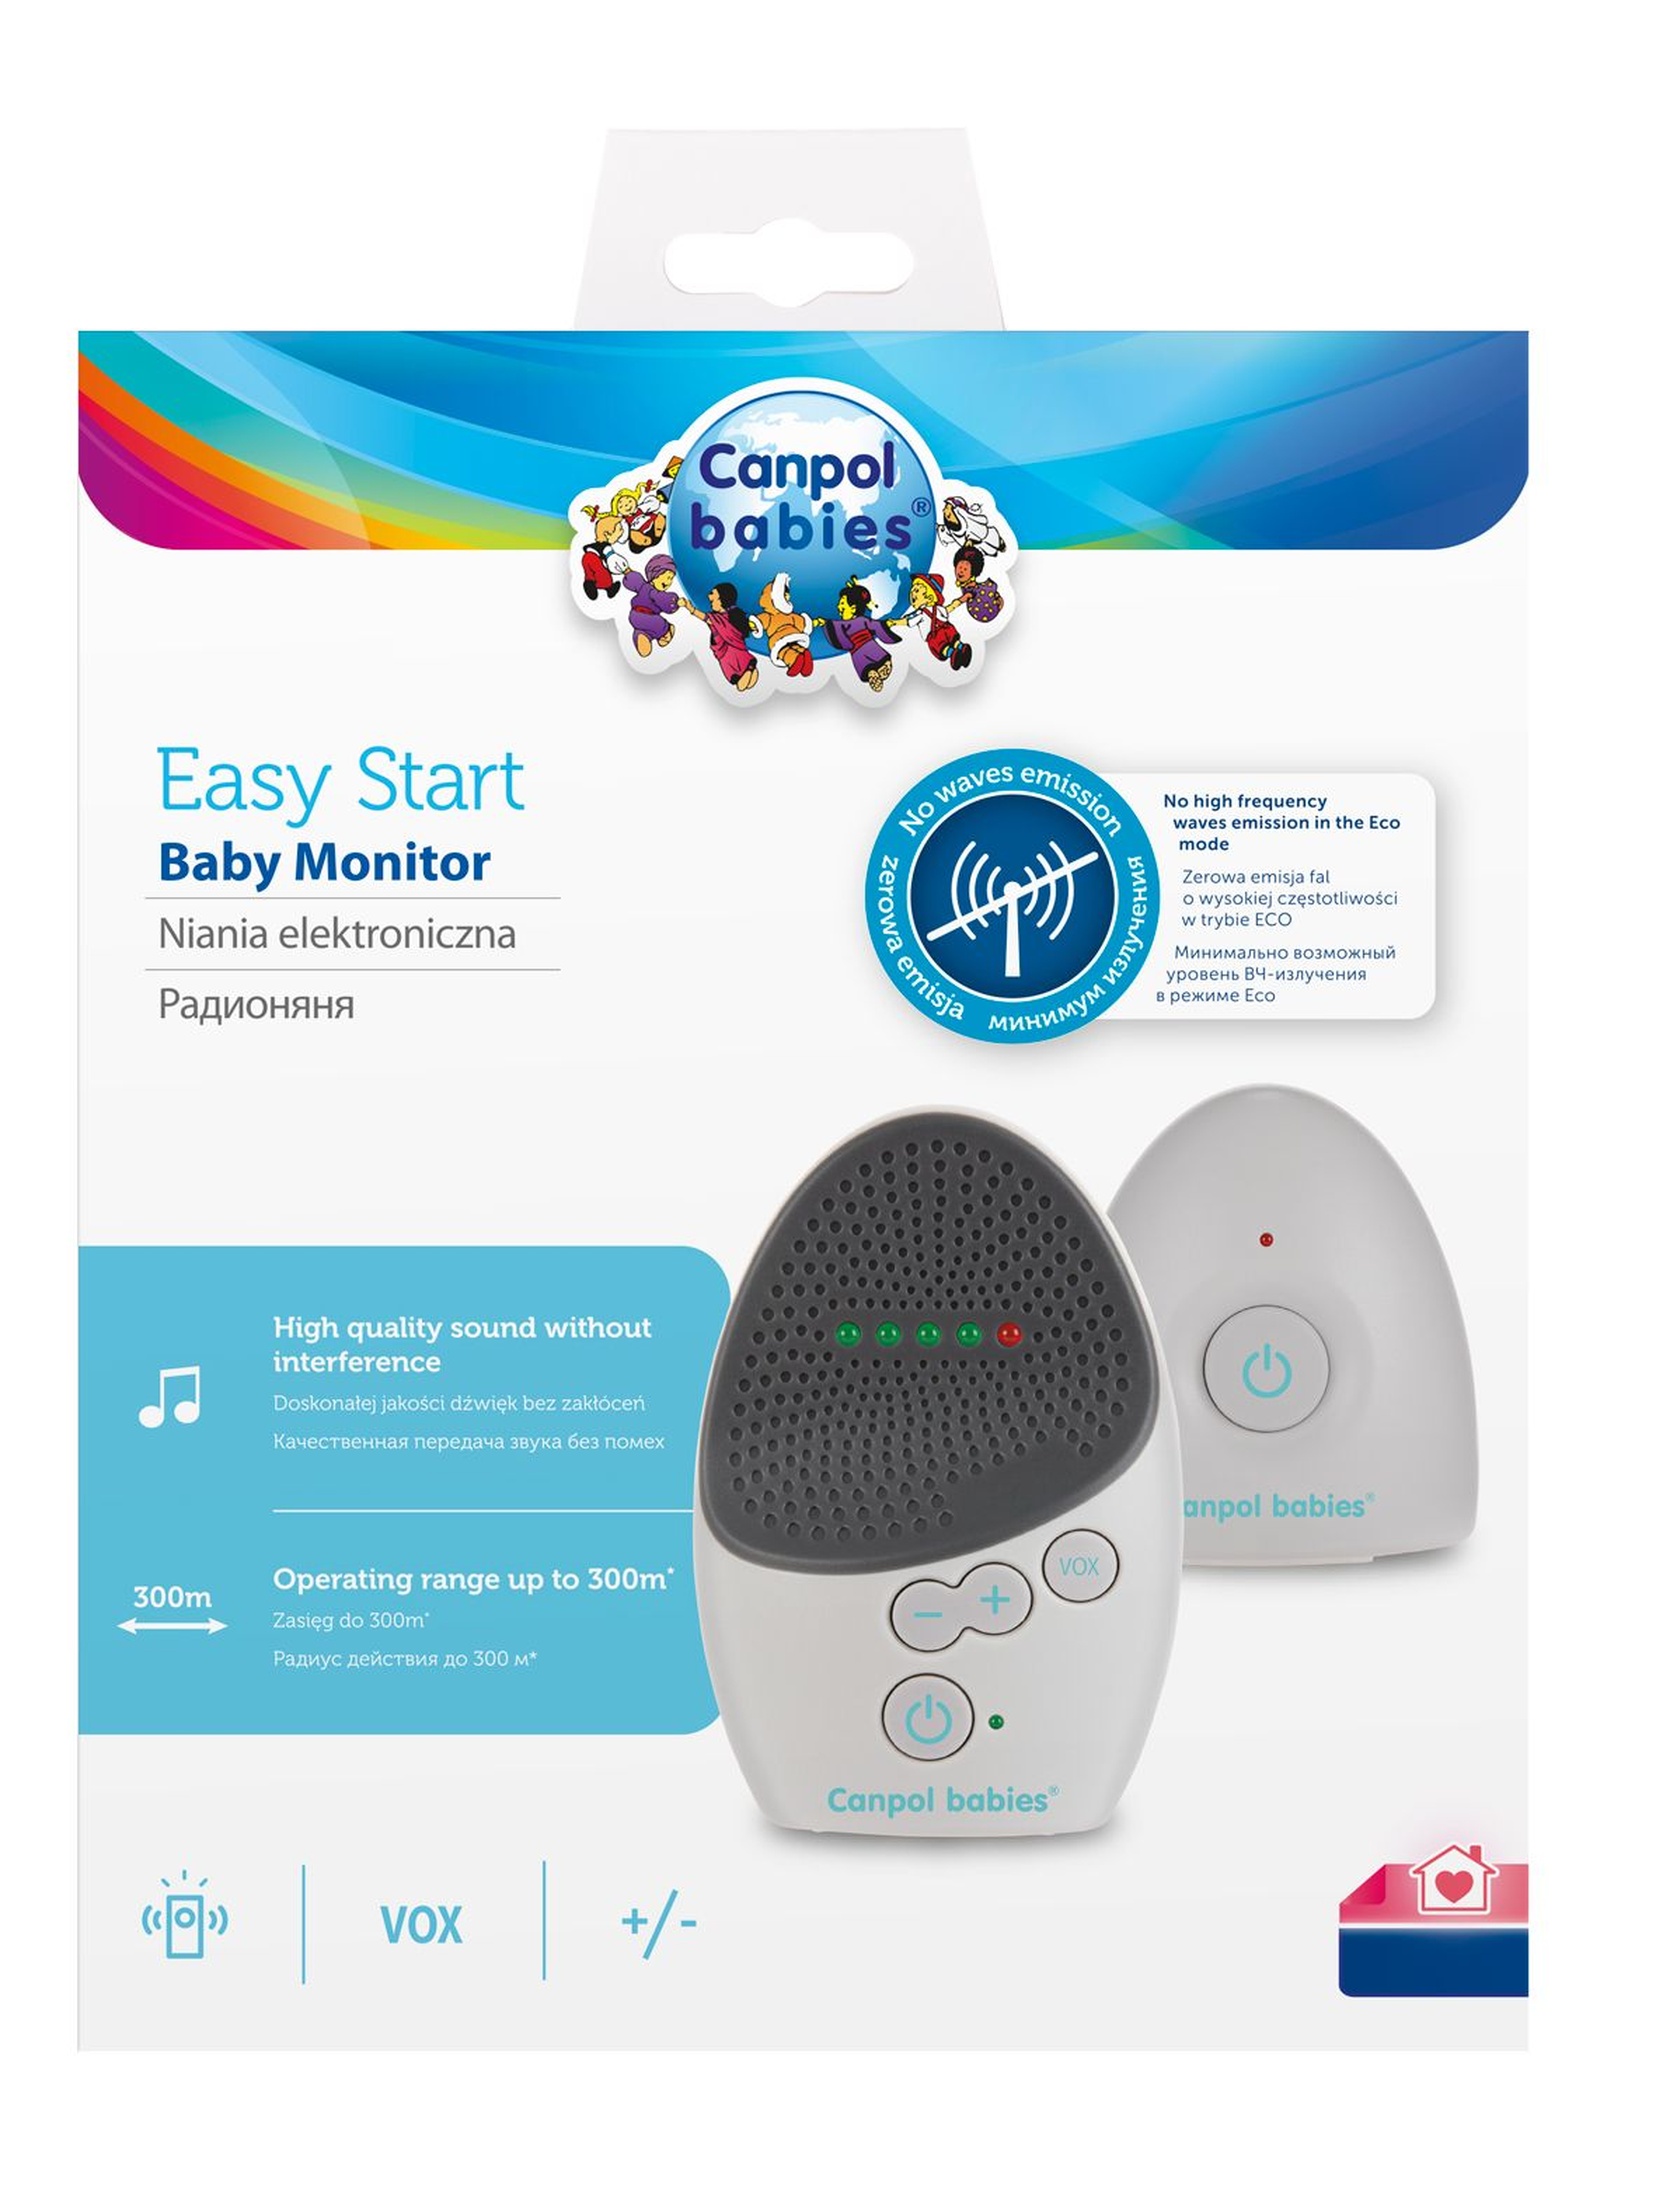 Canpol babies niania elektroniczna EasyStart